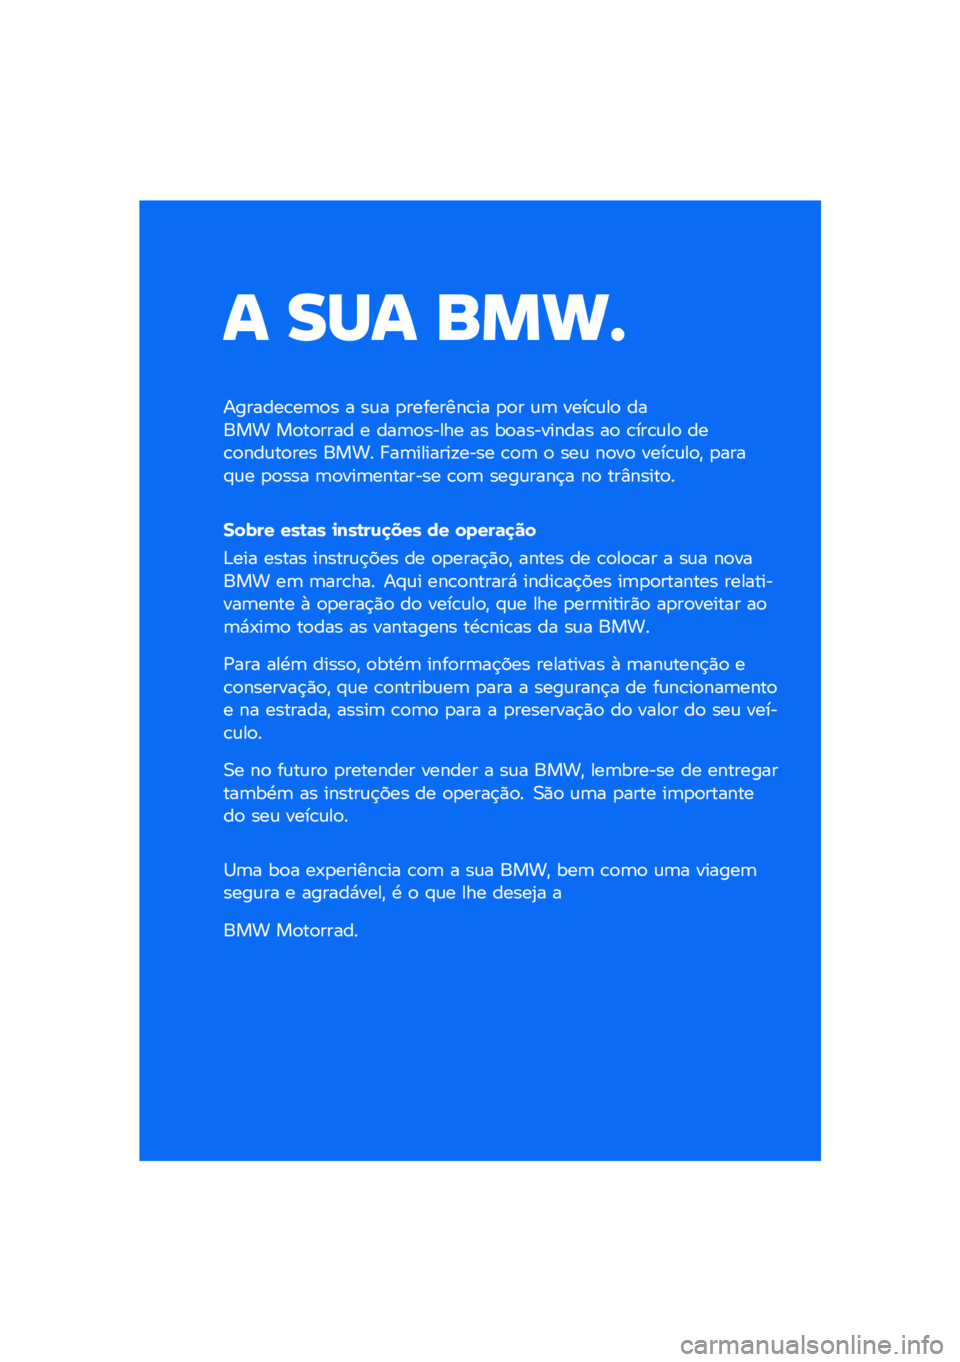 BMW MOTORRAD R NINE T SCRAMBLER 2021  Manual do condutor (in Portuguese) � ��� ����\b
�������\b��	�
� � ��\f� �
��������\b�� �
�
� �\f�	 ����\b�\f��
 ����� ��
��
���� � ���	�
����� �� ��
��������� ��
 �\b���